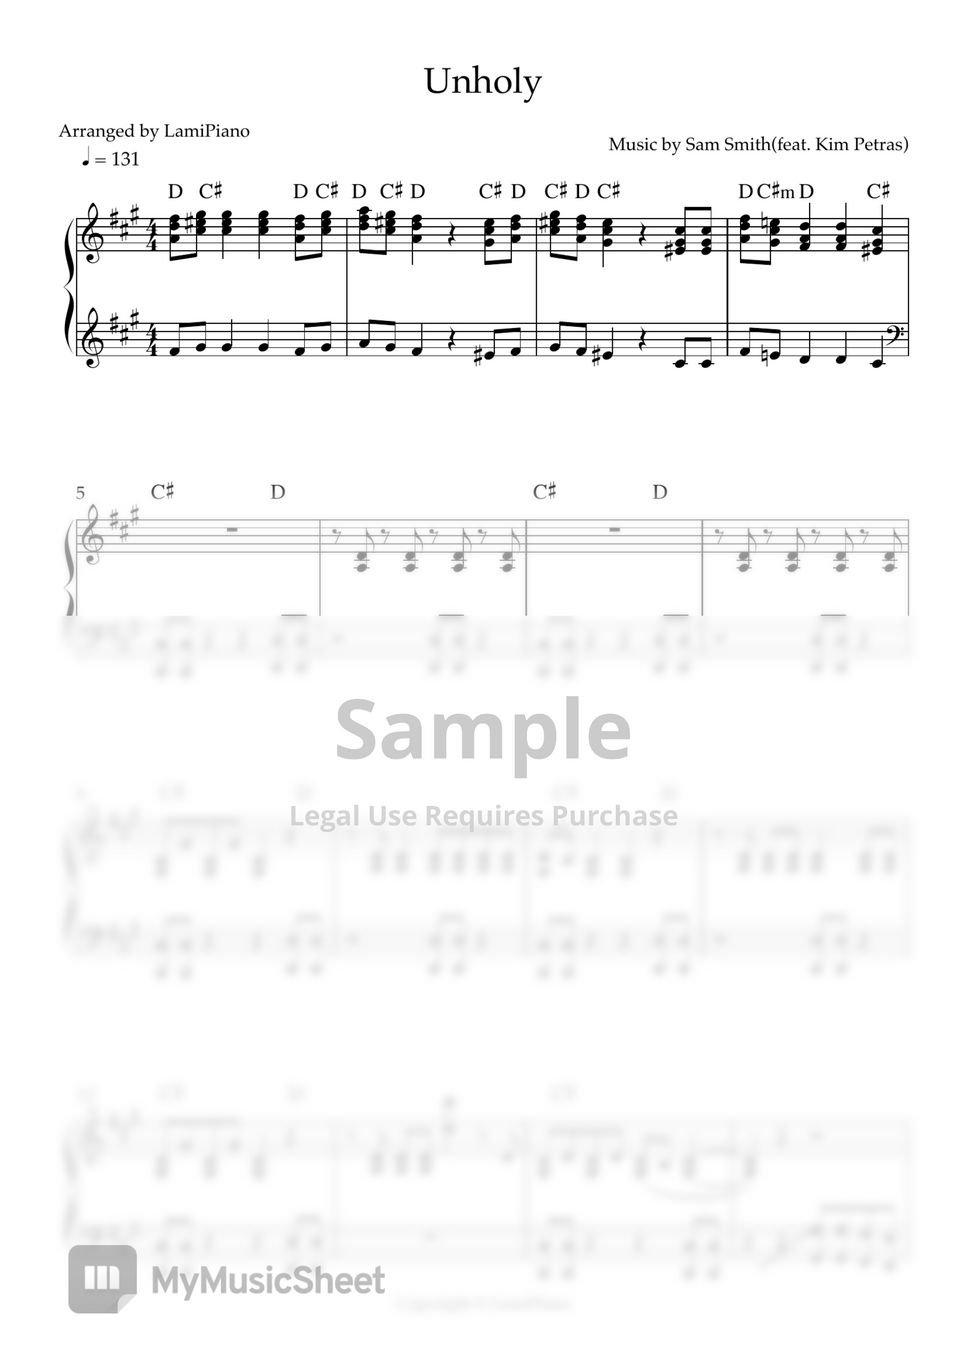 Sam Smith, Kim Petras - Unholy (Piano solo) by LamiPiano